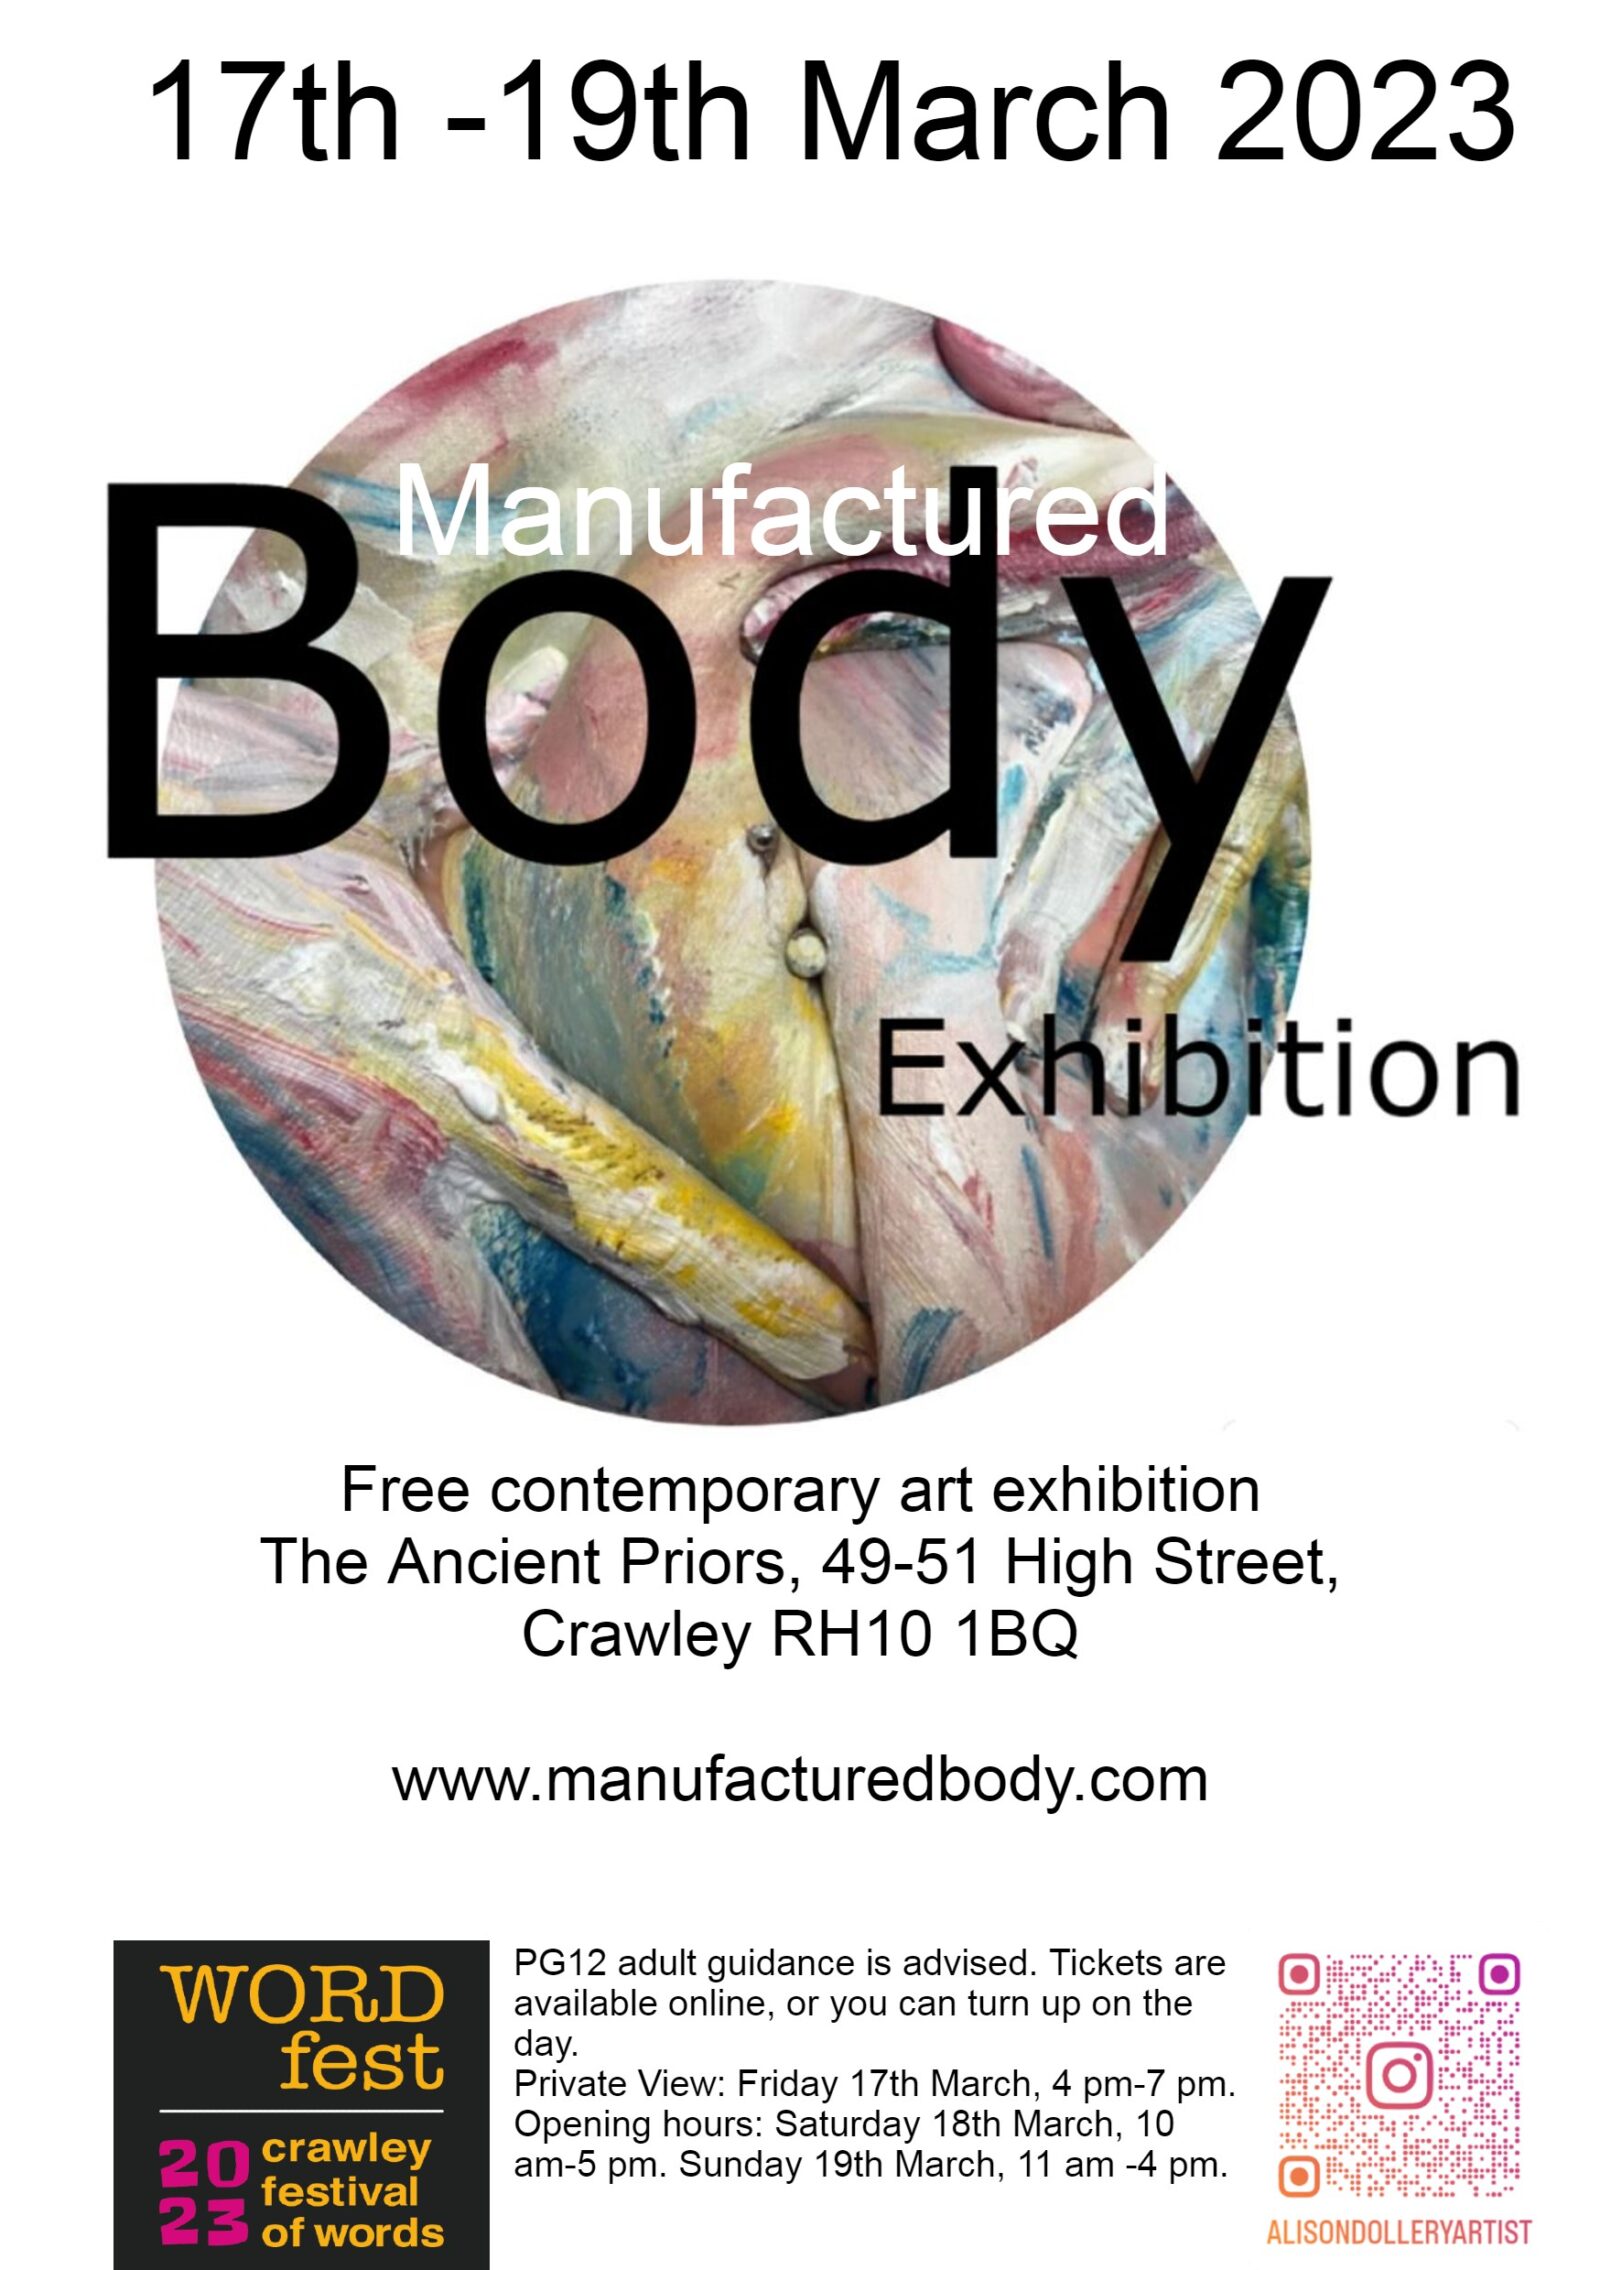 Manufactured body exhibition